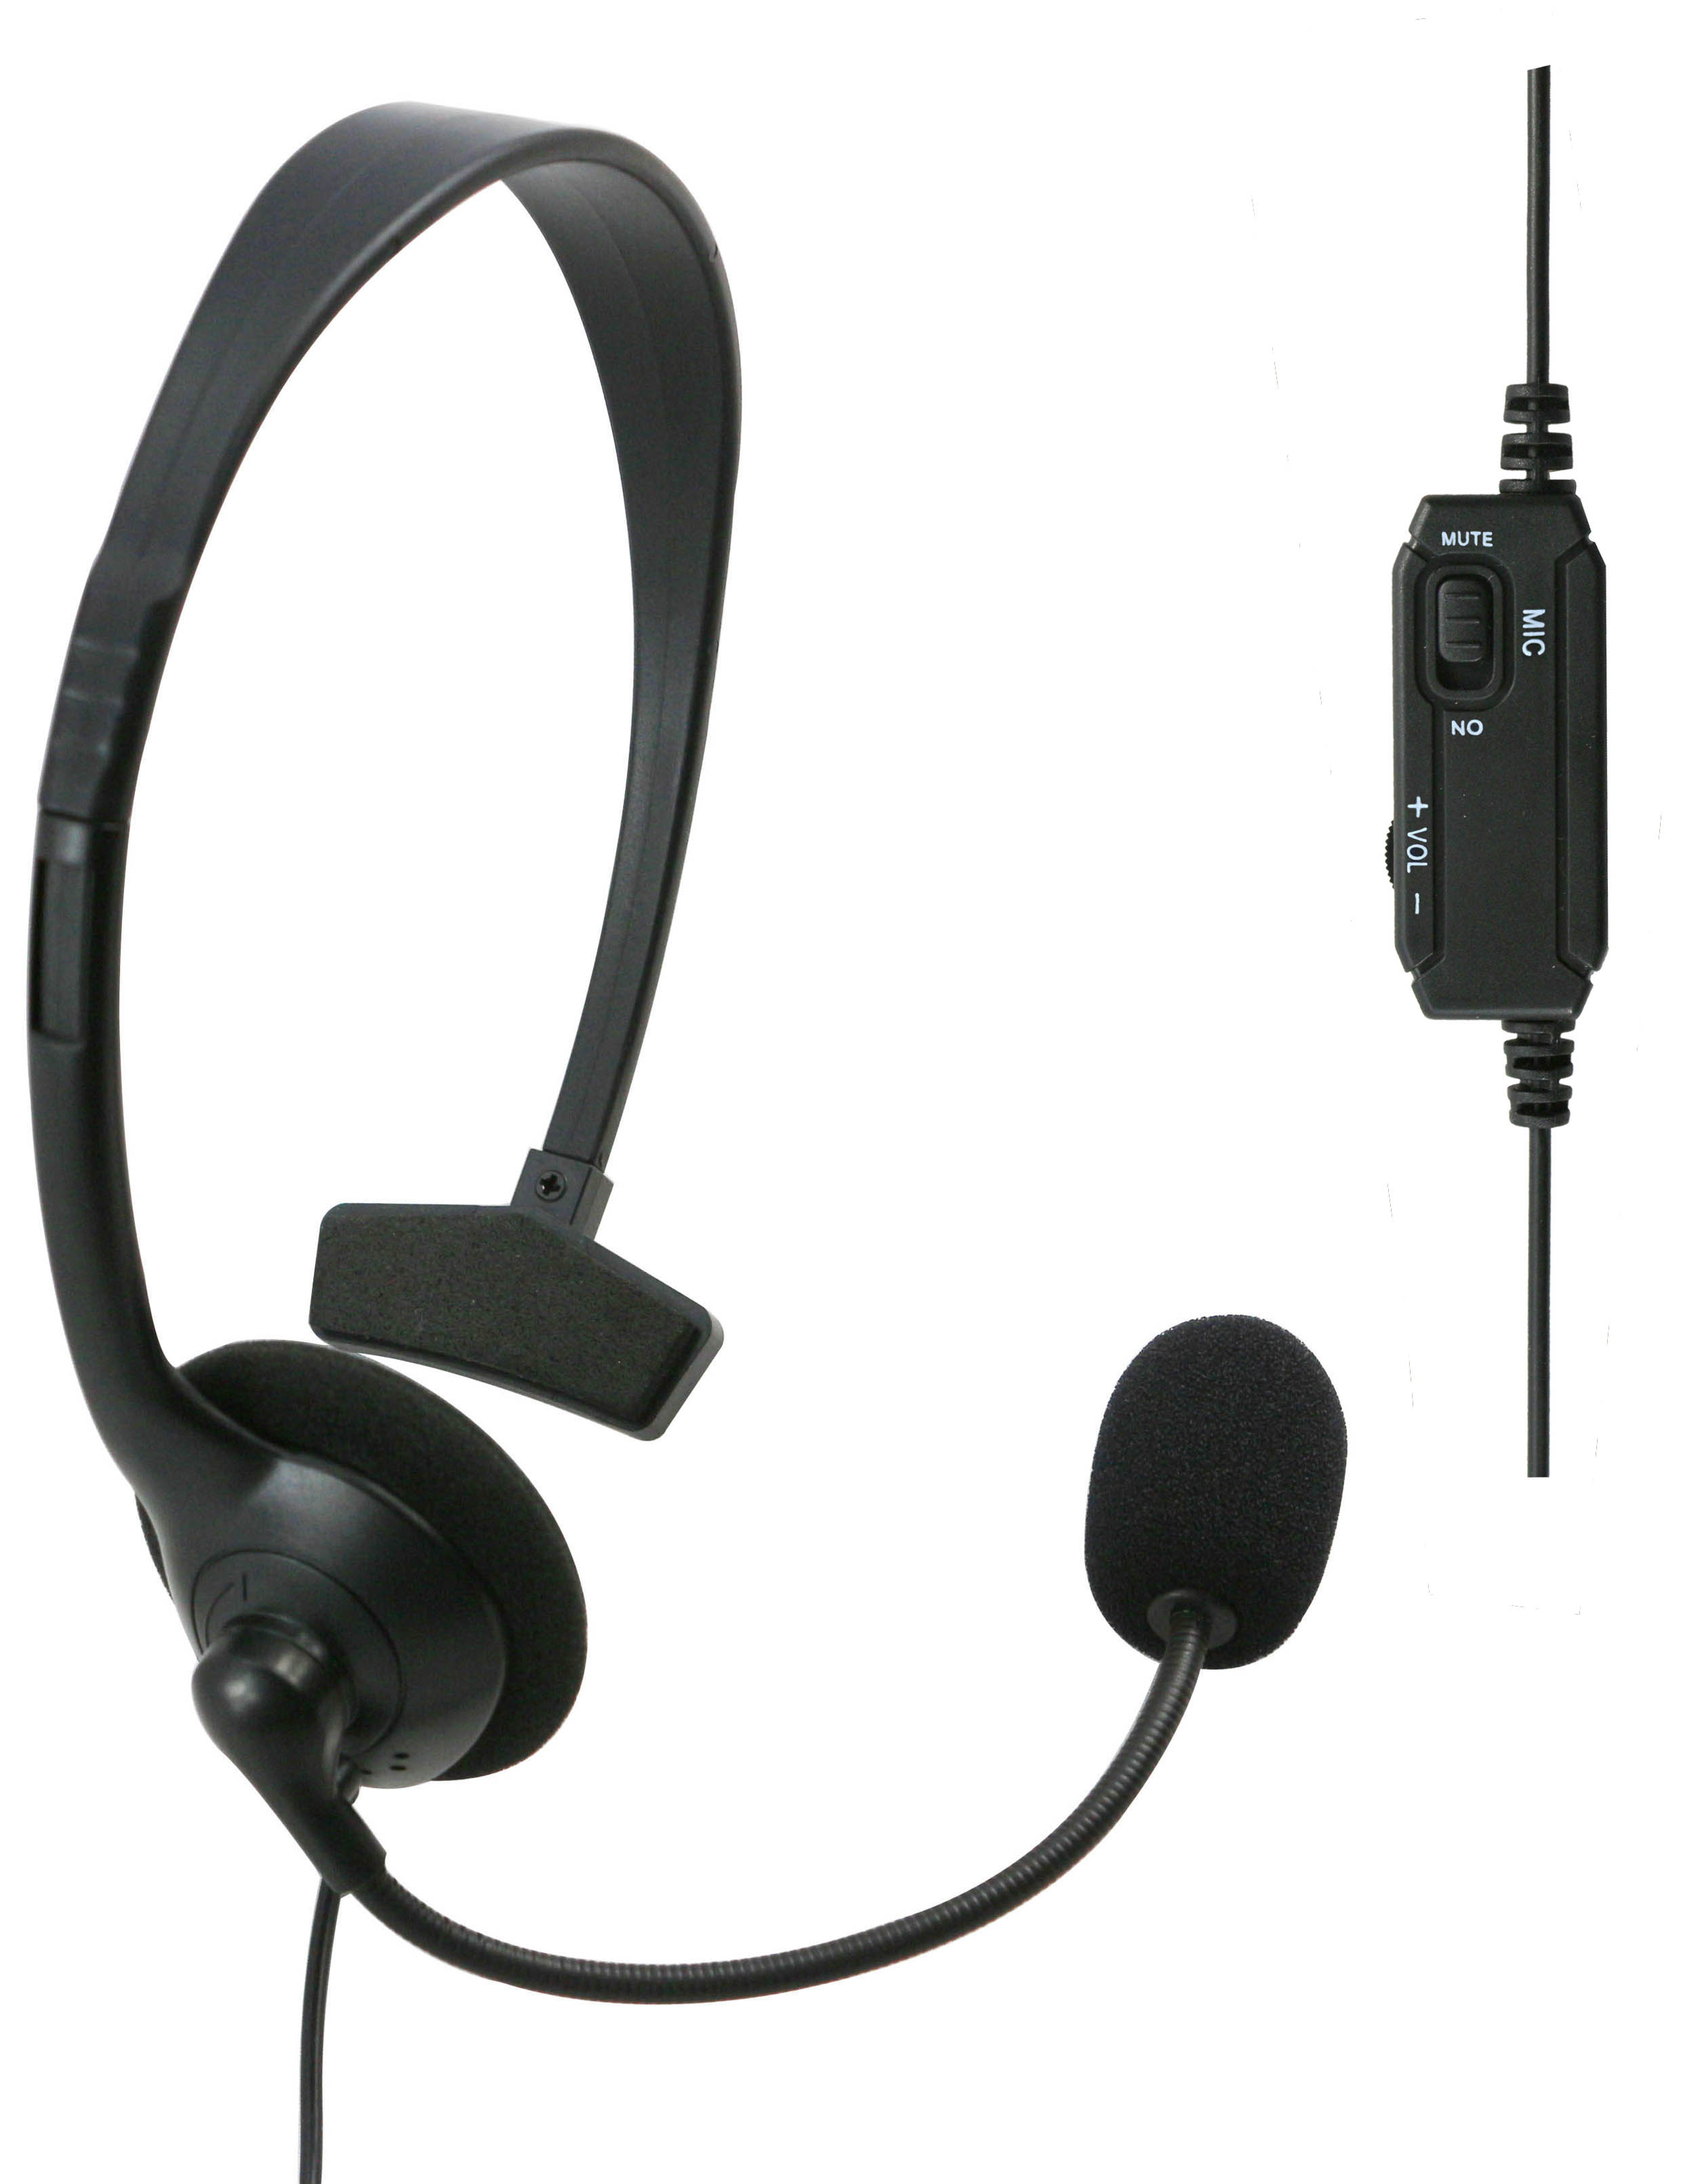 Call Center Headset PC-480